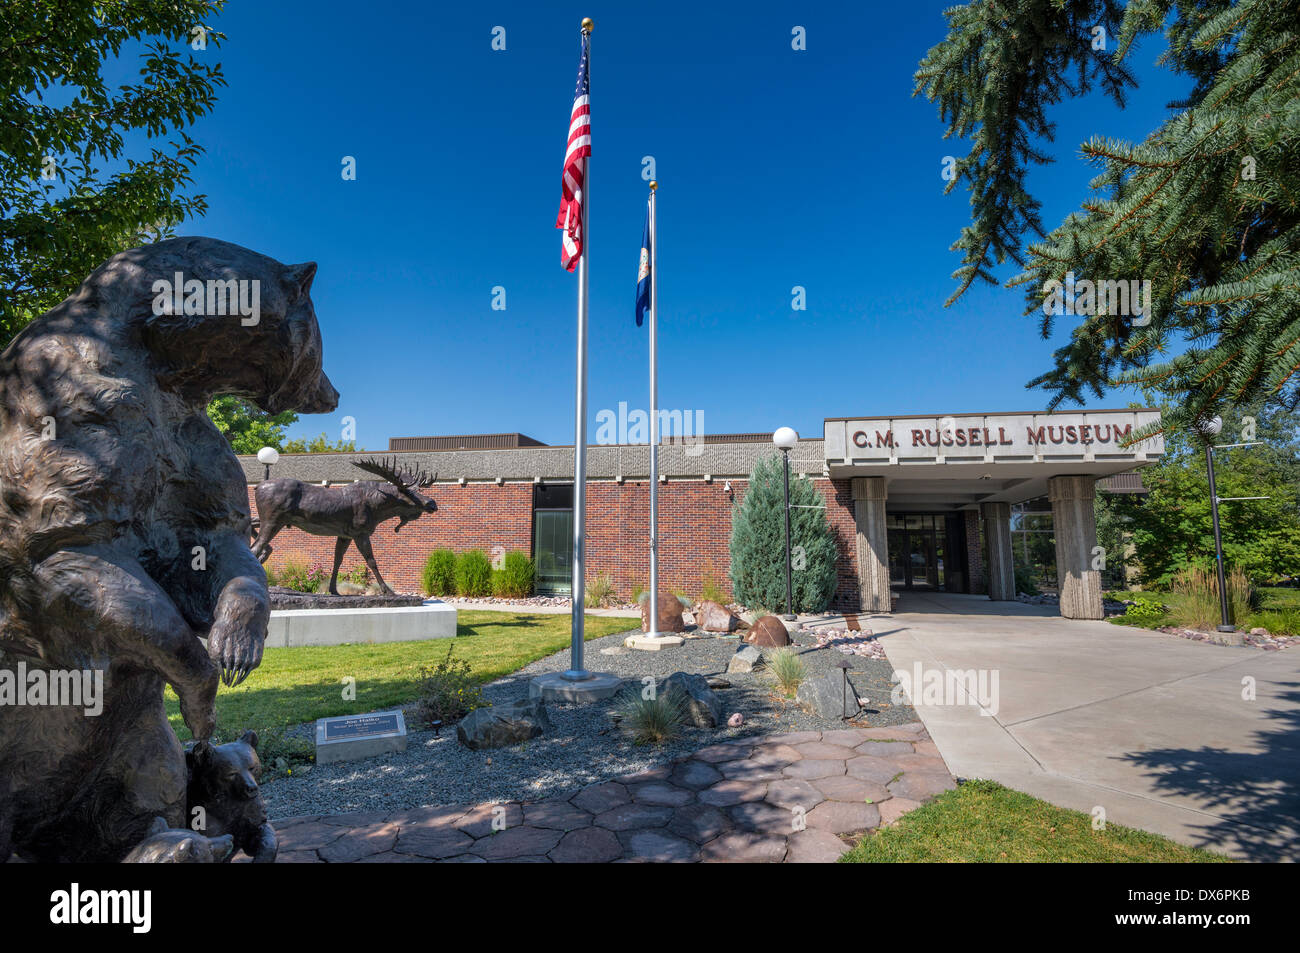 Nase in den Wind, Skulptur von Grizzly-Bären von Joe Halko, Skulpturengarten im C M Russell Museum in Great Falls, Montana, USA Stockfoto